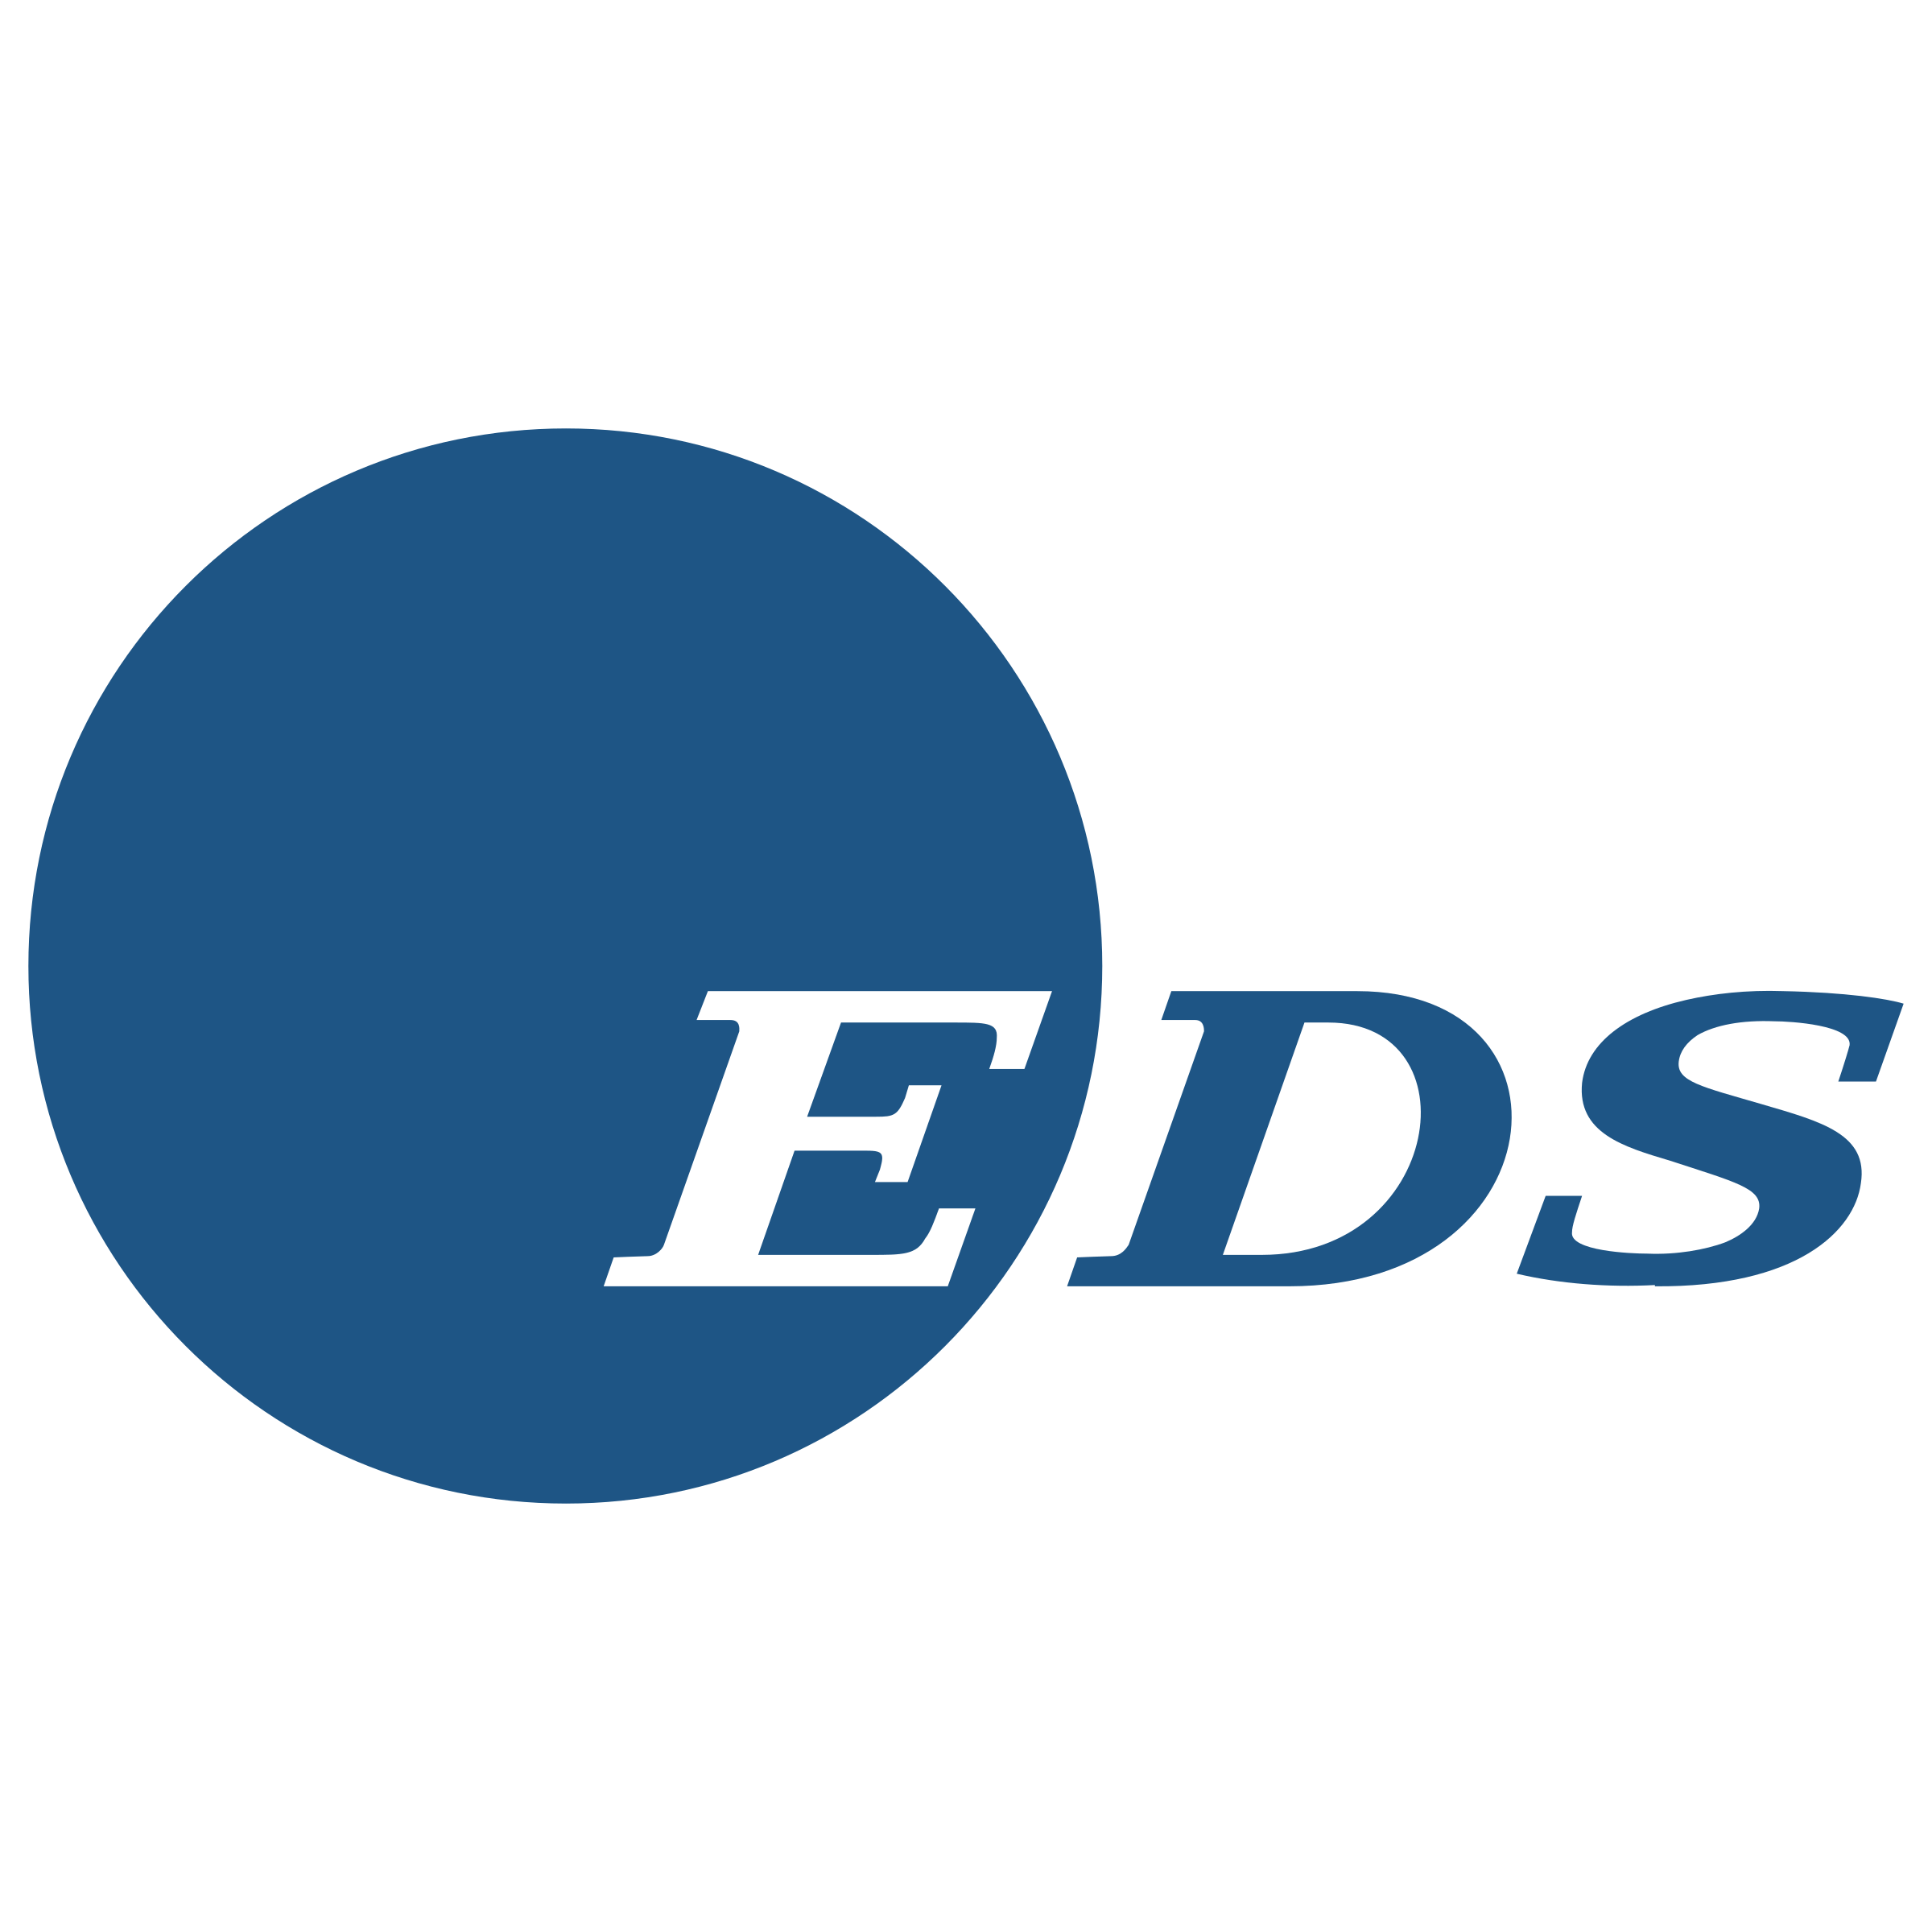 Ed's Logo - EDS Logo PNG Transparent & SVG Vector - Freebie Supply